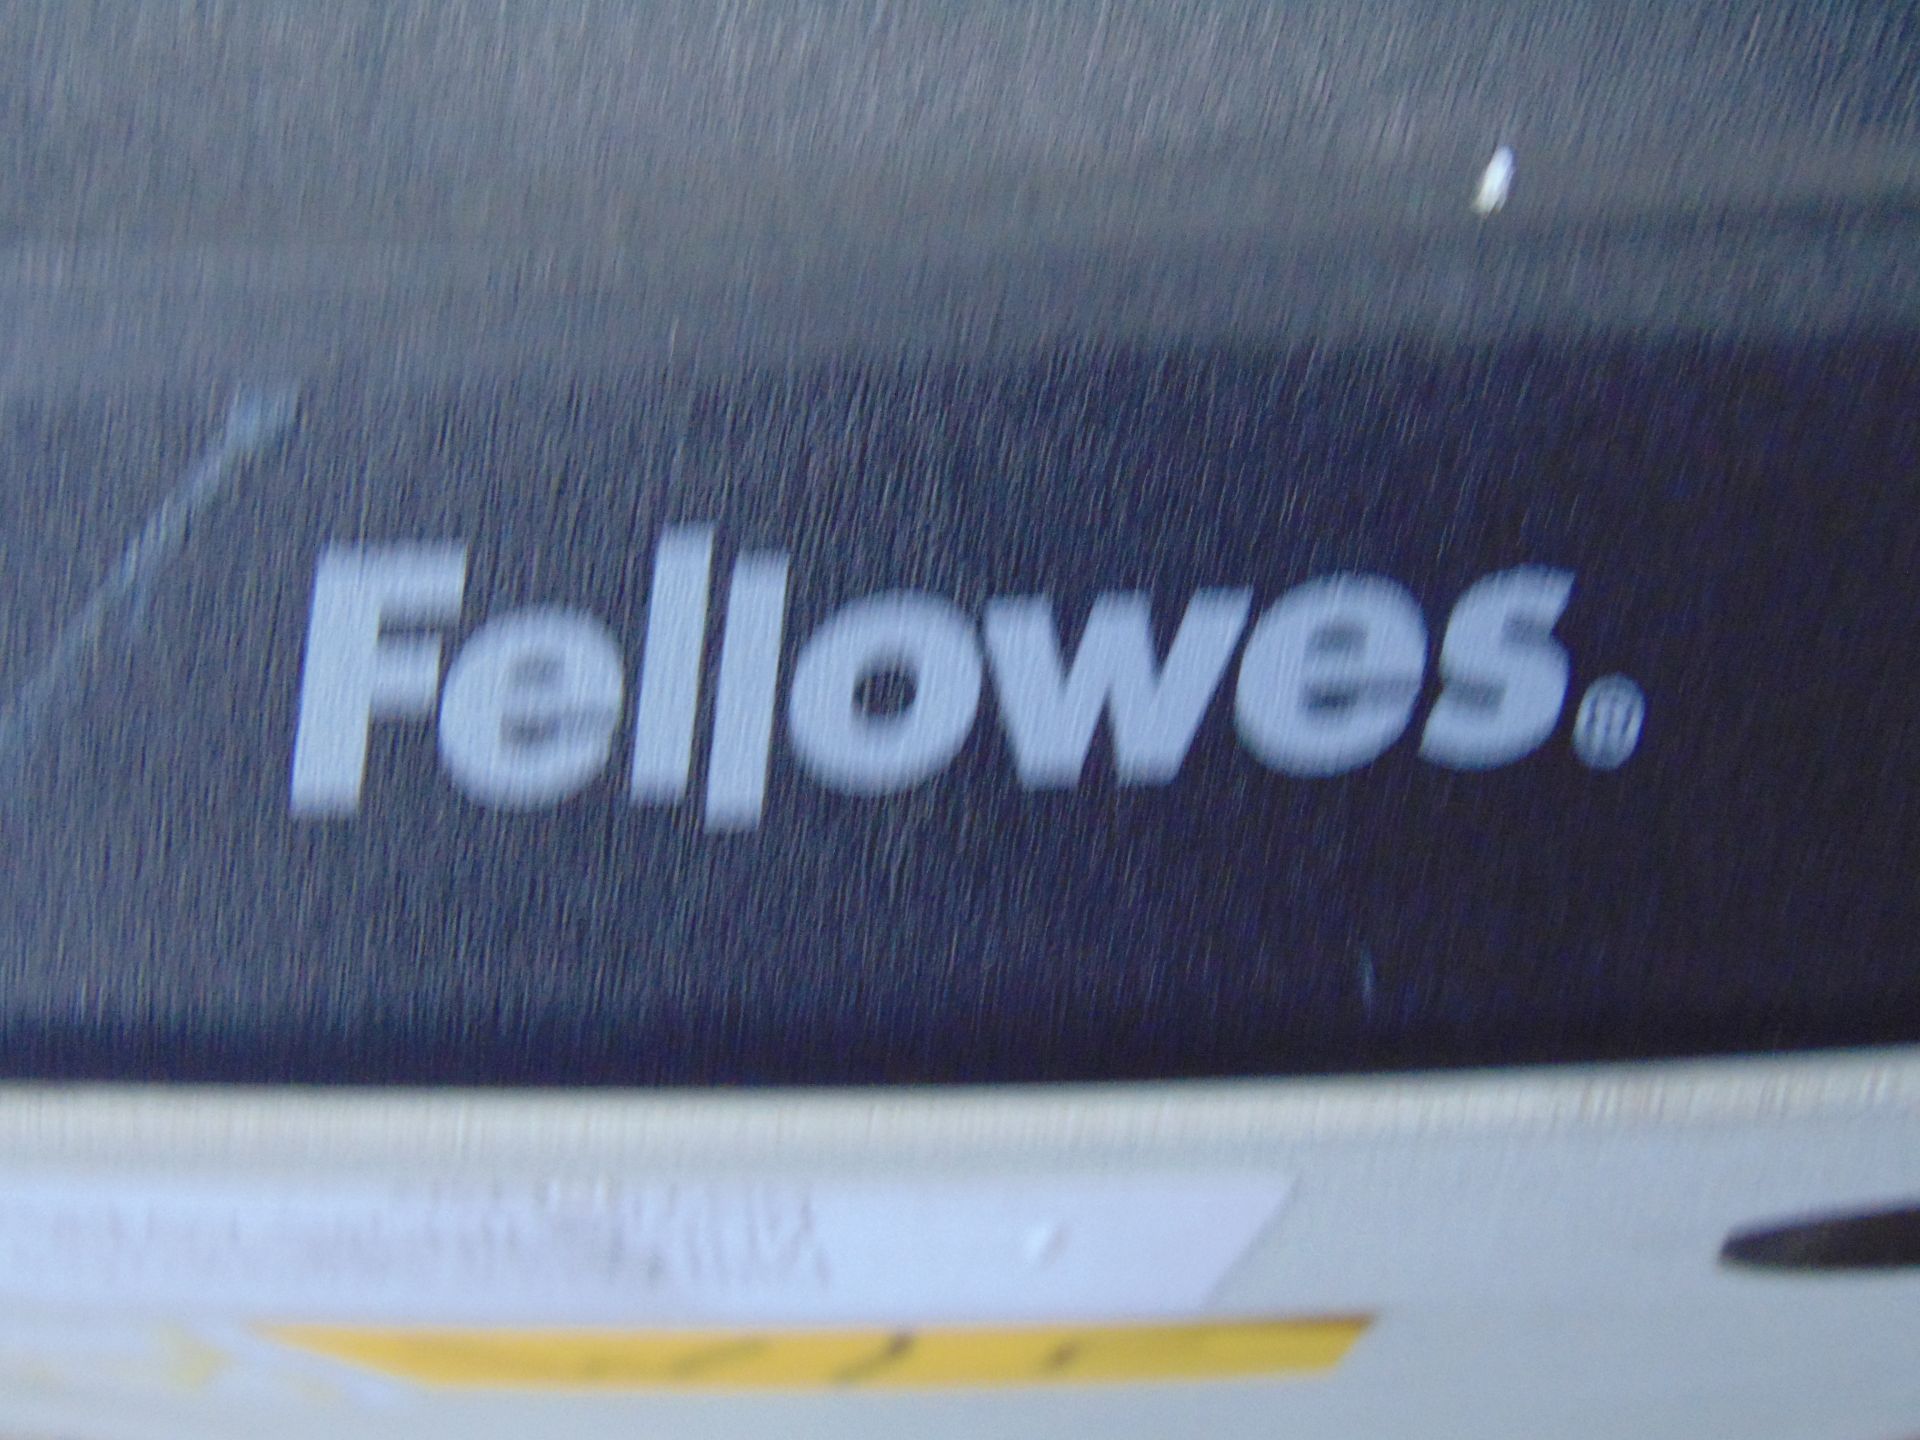 Fellows Powershred C-320c Shredder - Image 7 of 9